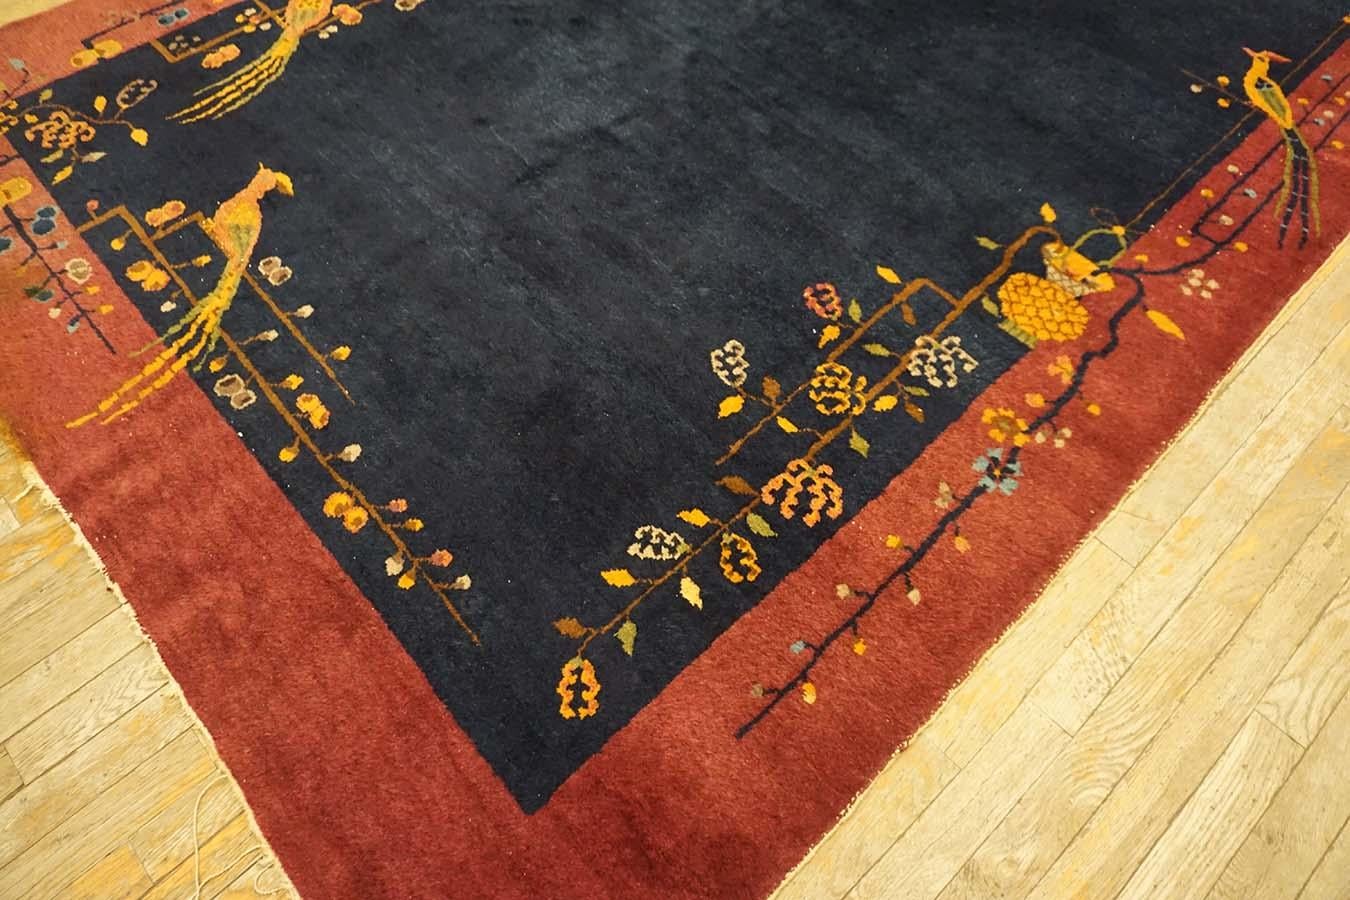 1920s Chinese Art Deco Carpet ( 6' x 8'9